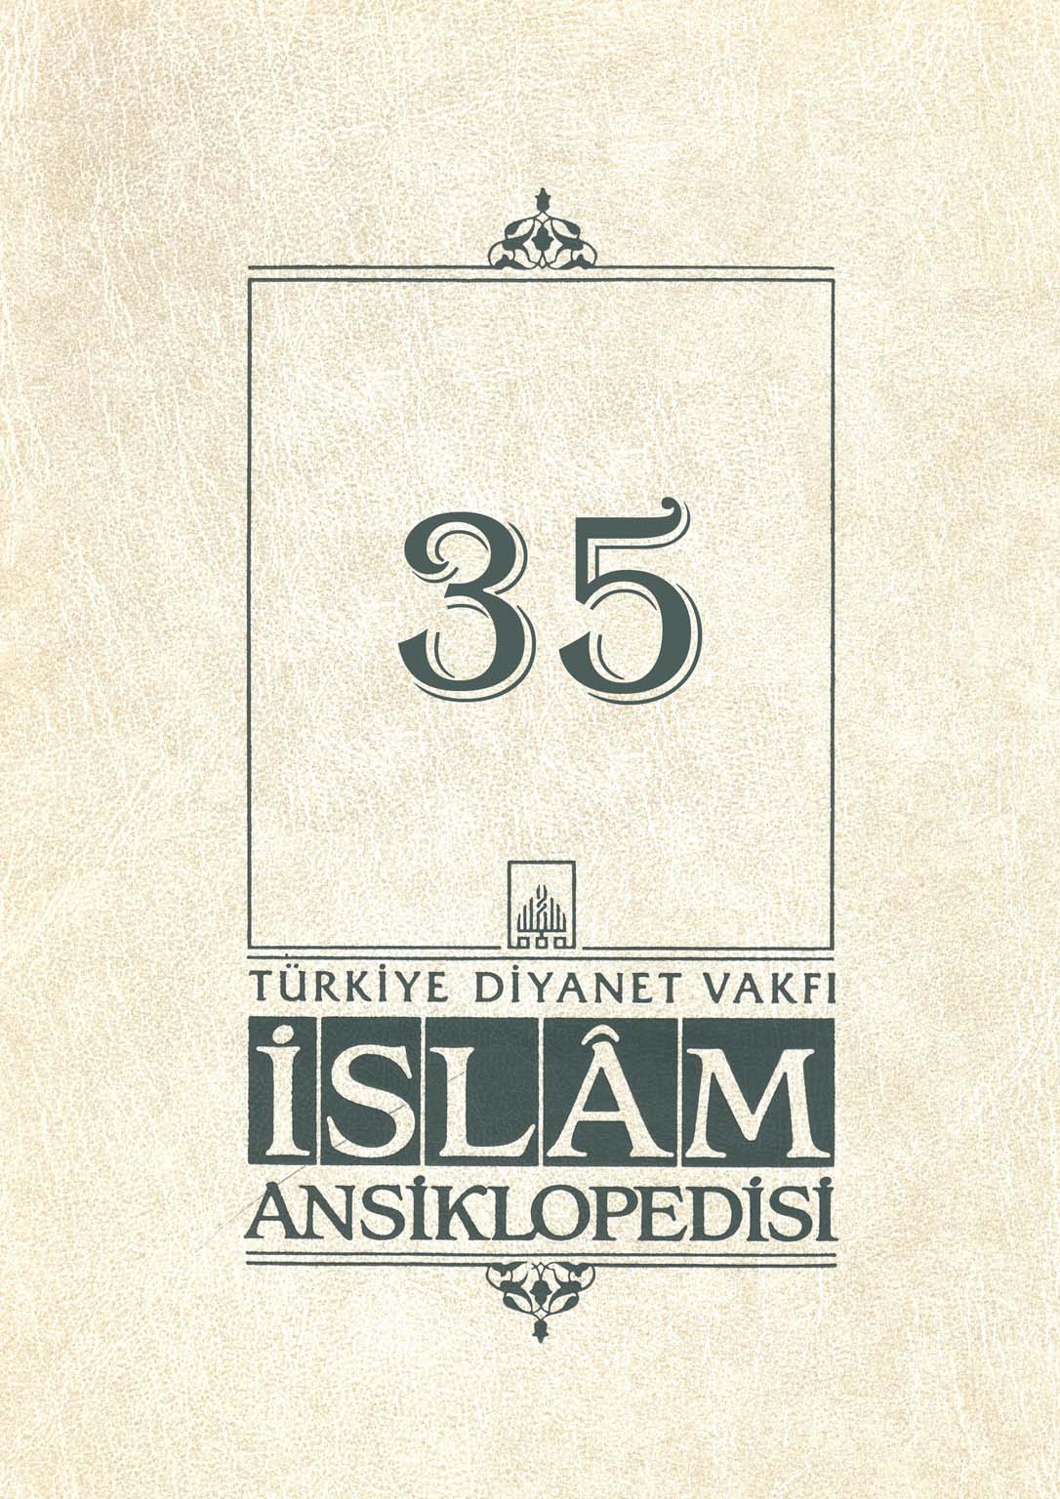 İslam Ansiklopedisi 35. Cilt Resuliler Kitap Kapağı